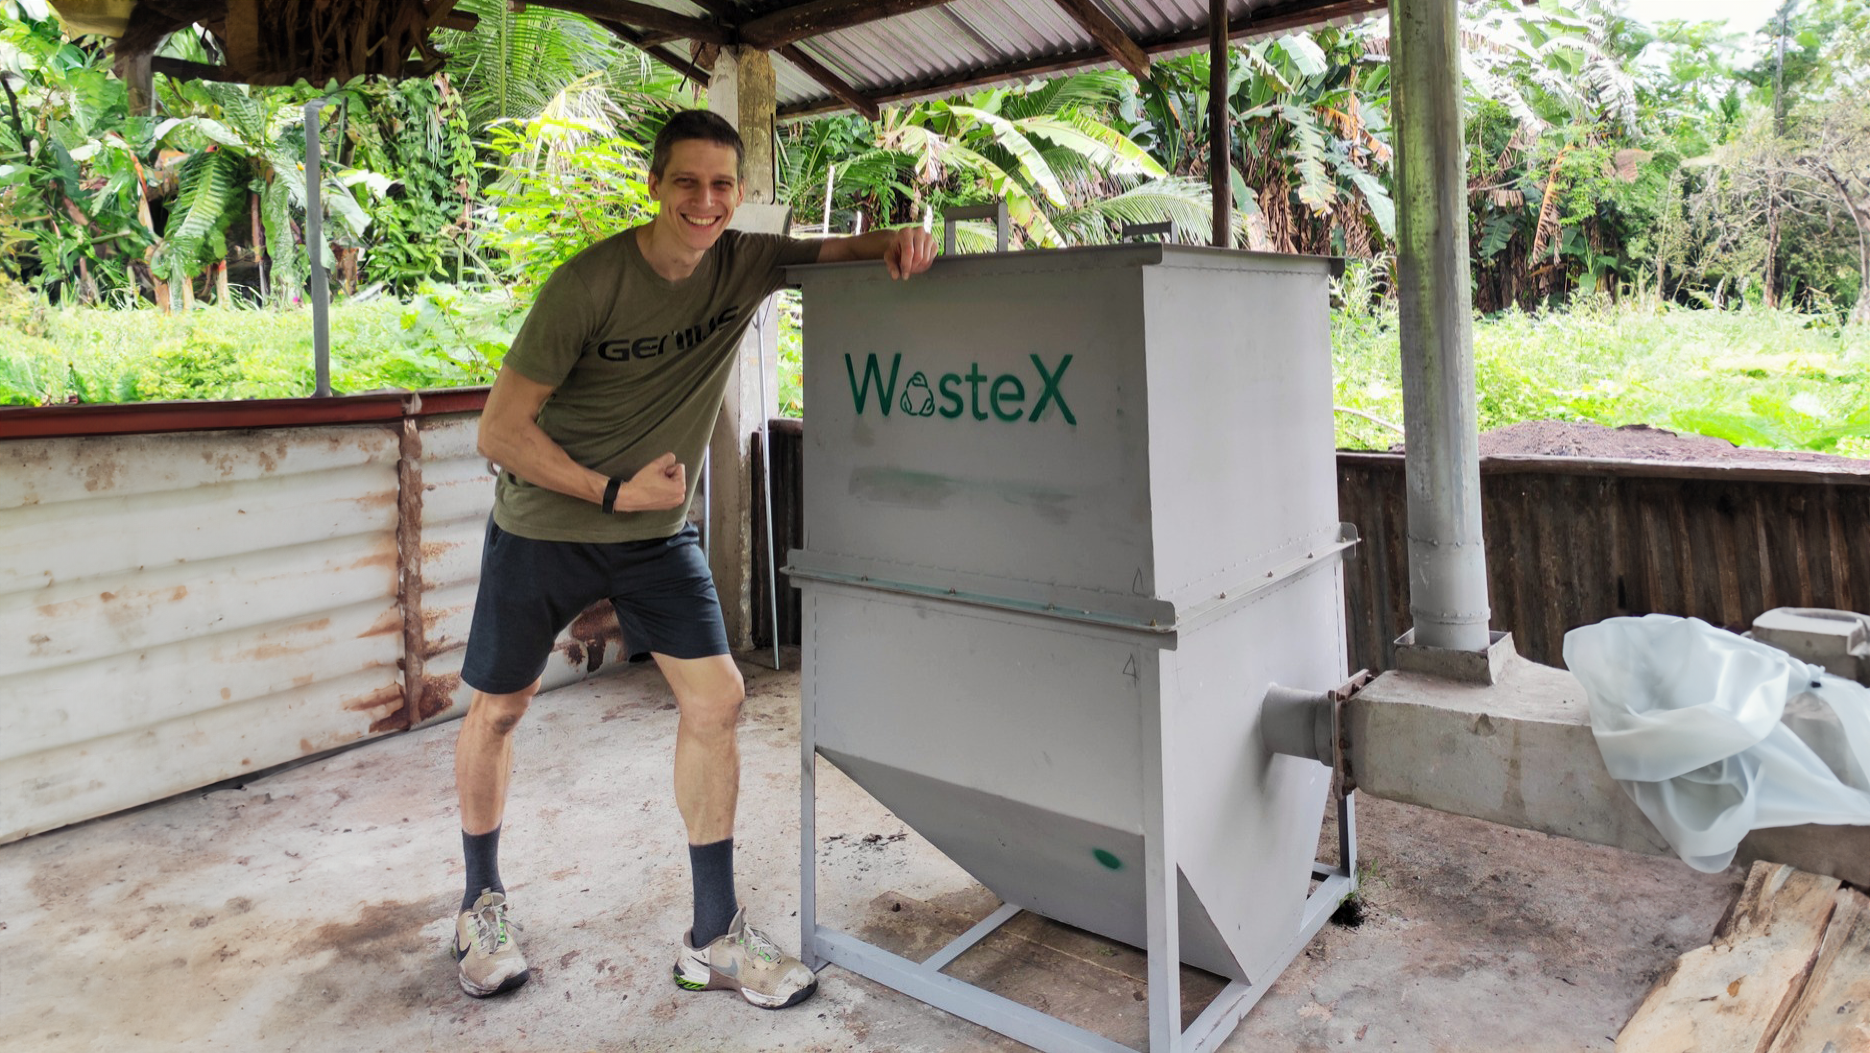 Wavemaker-backed WasteX raises $450k to expand biochar solution across Indonesia